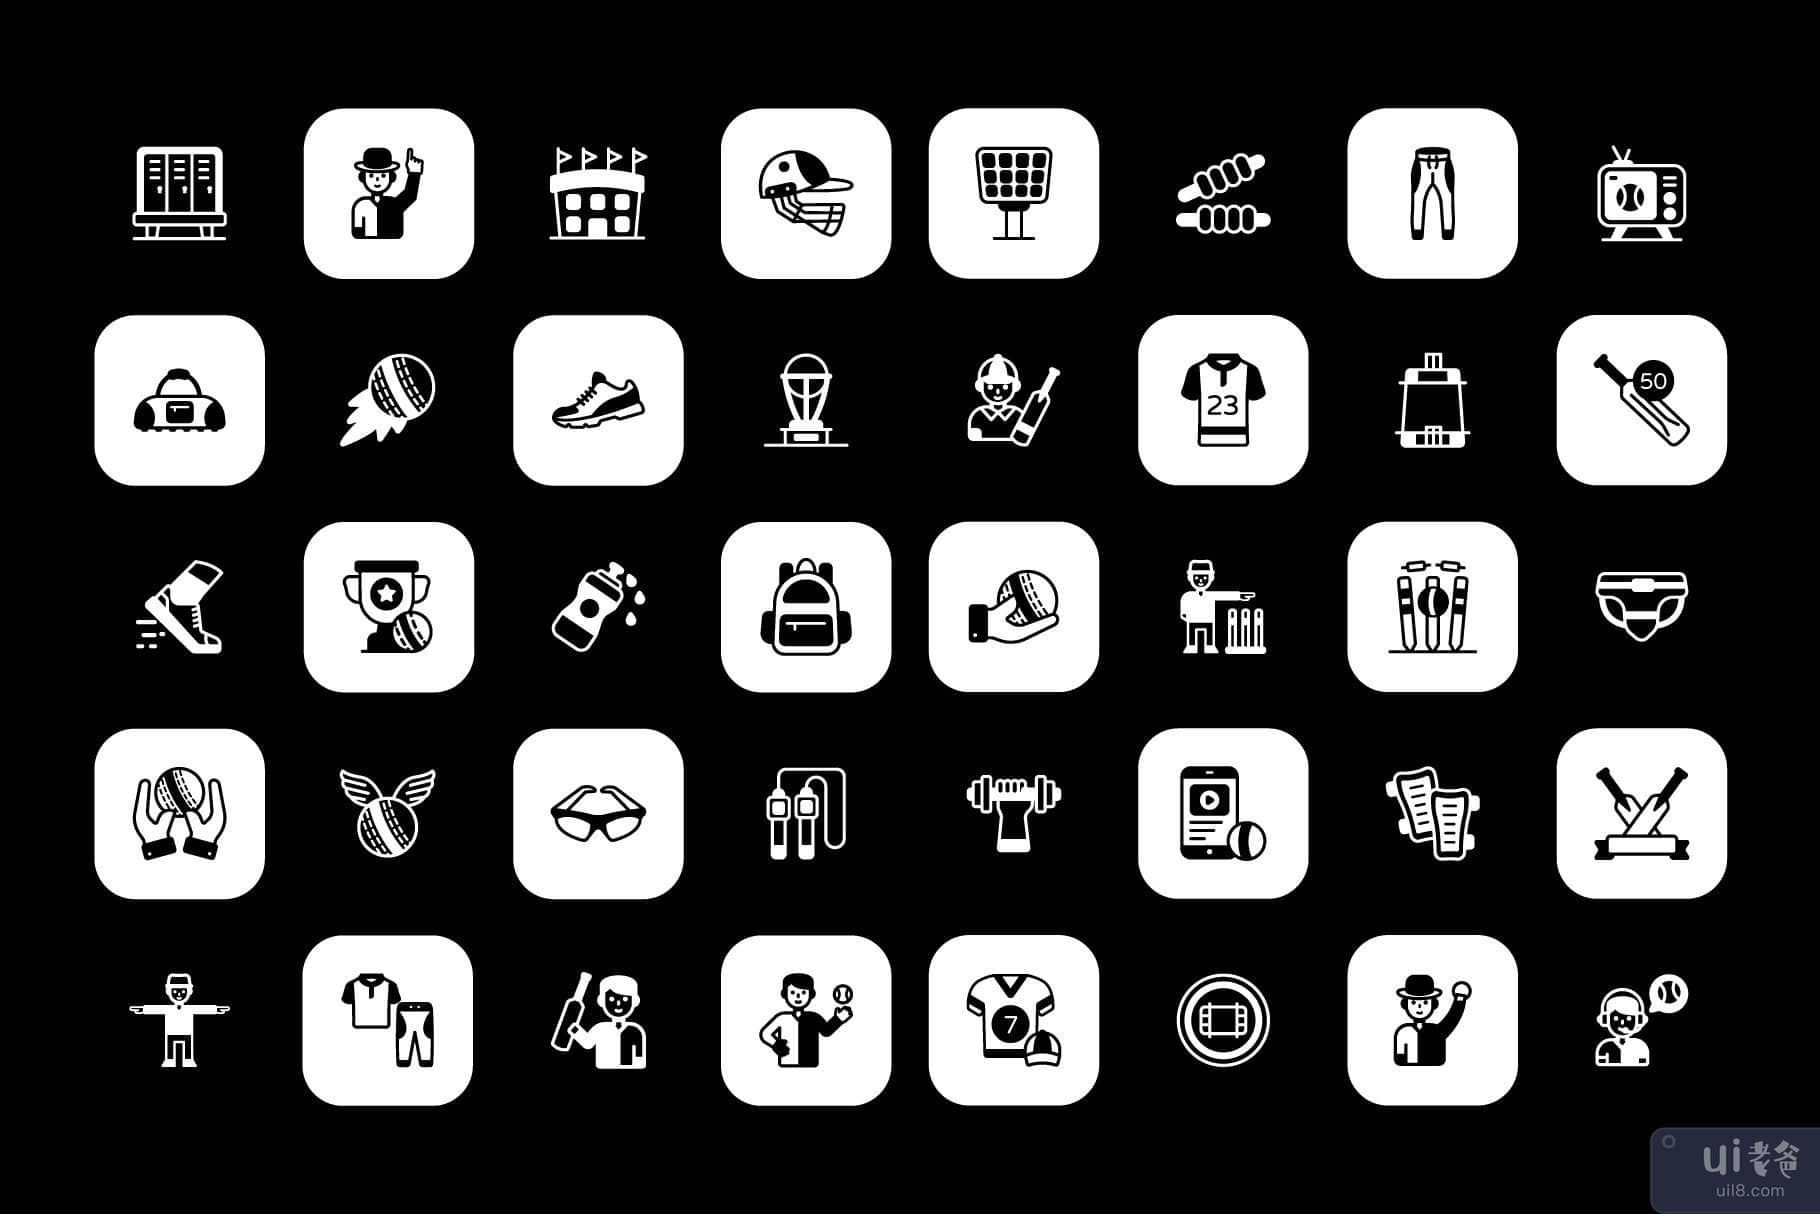 60 个板球设备字形图标(60 Cricket Equipment Glyph Icons)插图4